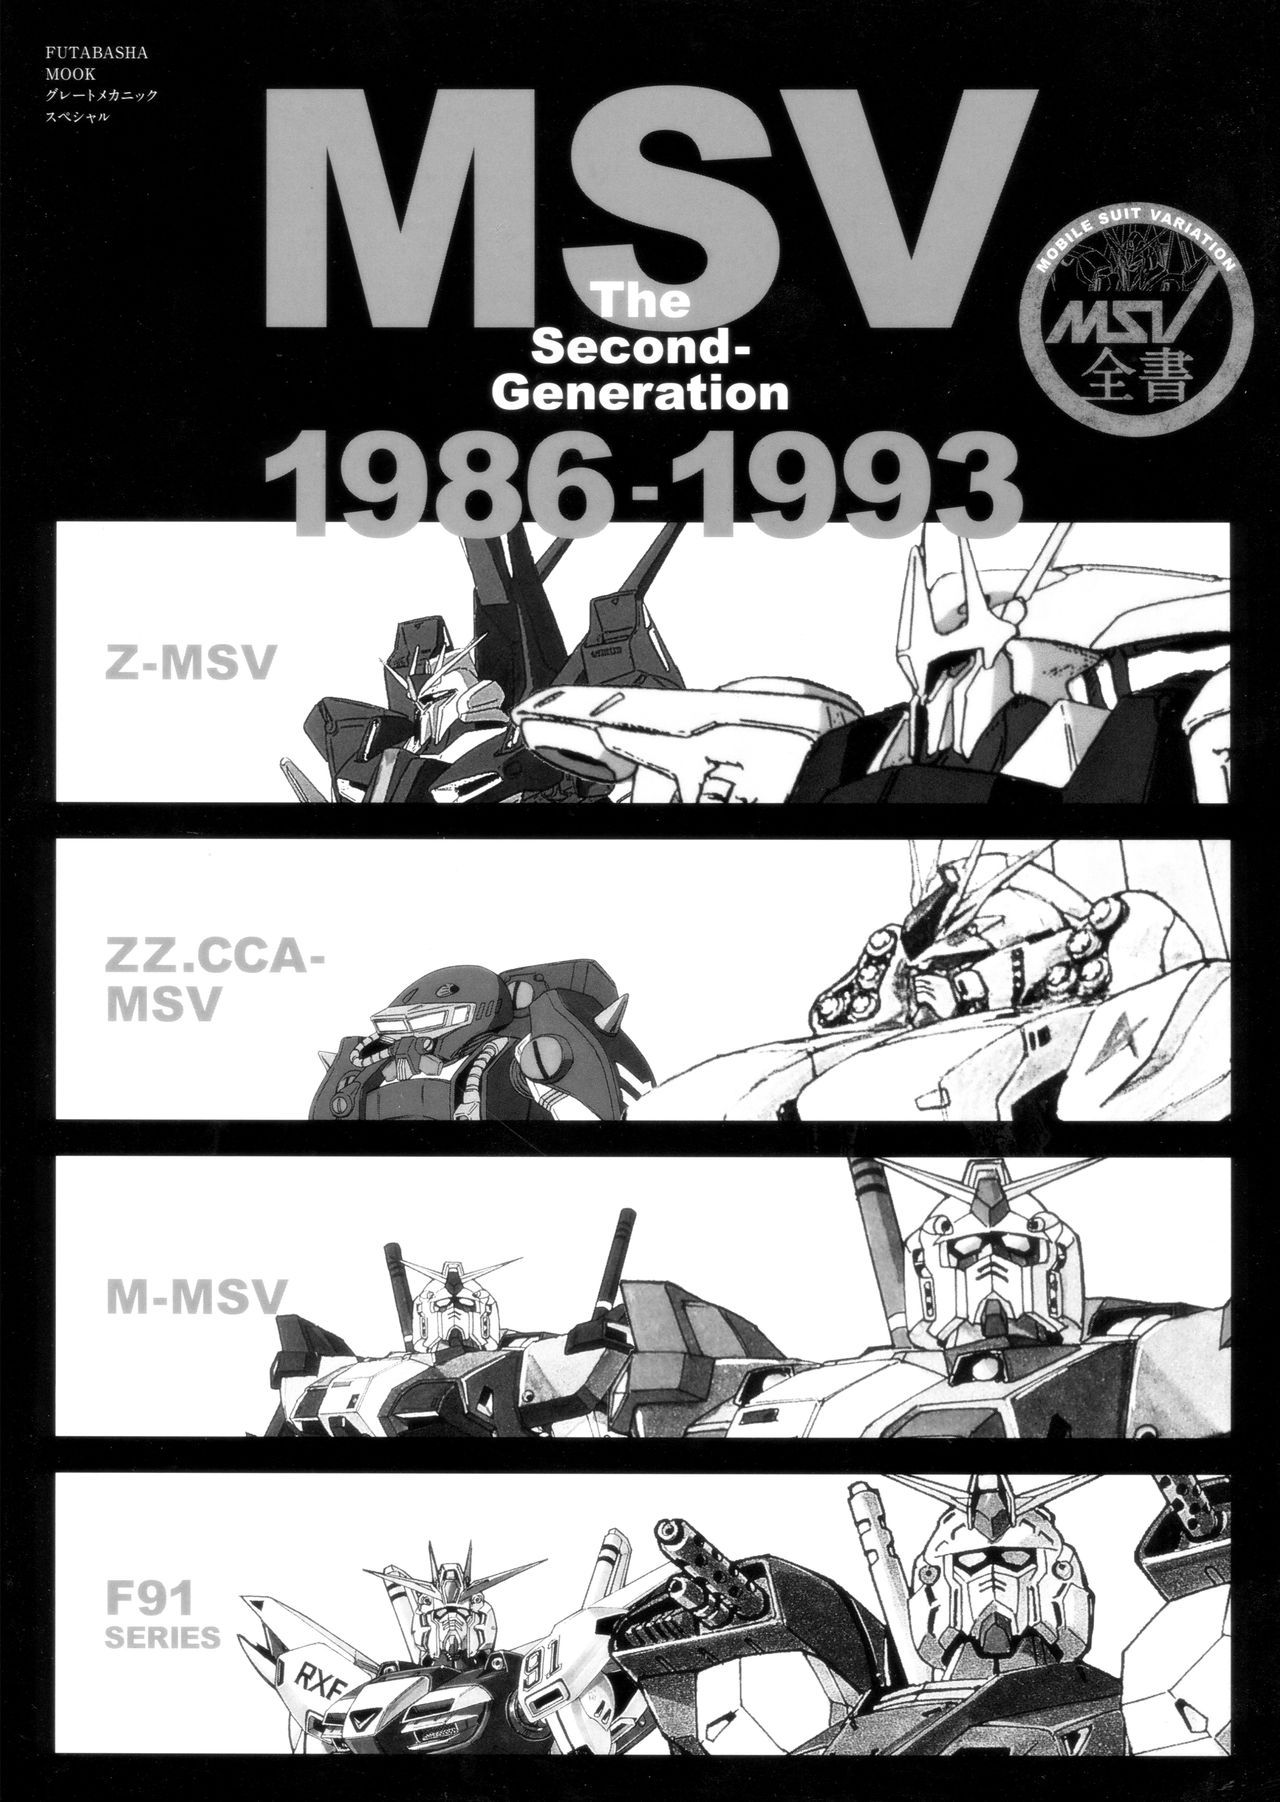 Mobile Suit Gundam - MSV The Second - Generation 1986-1993 1